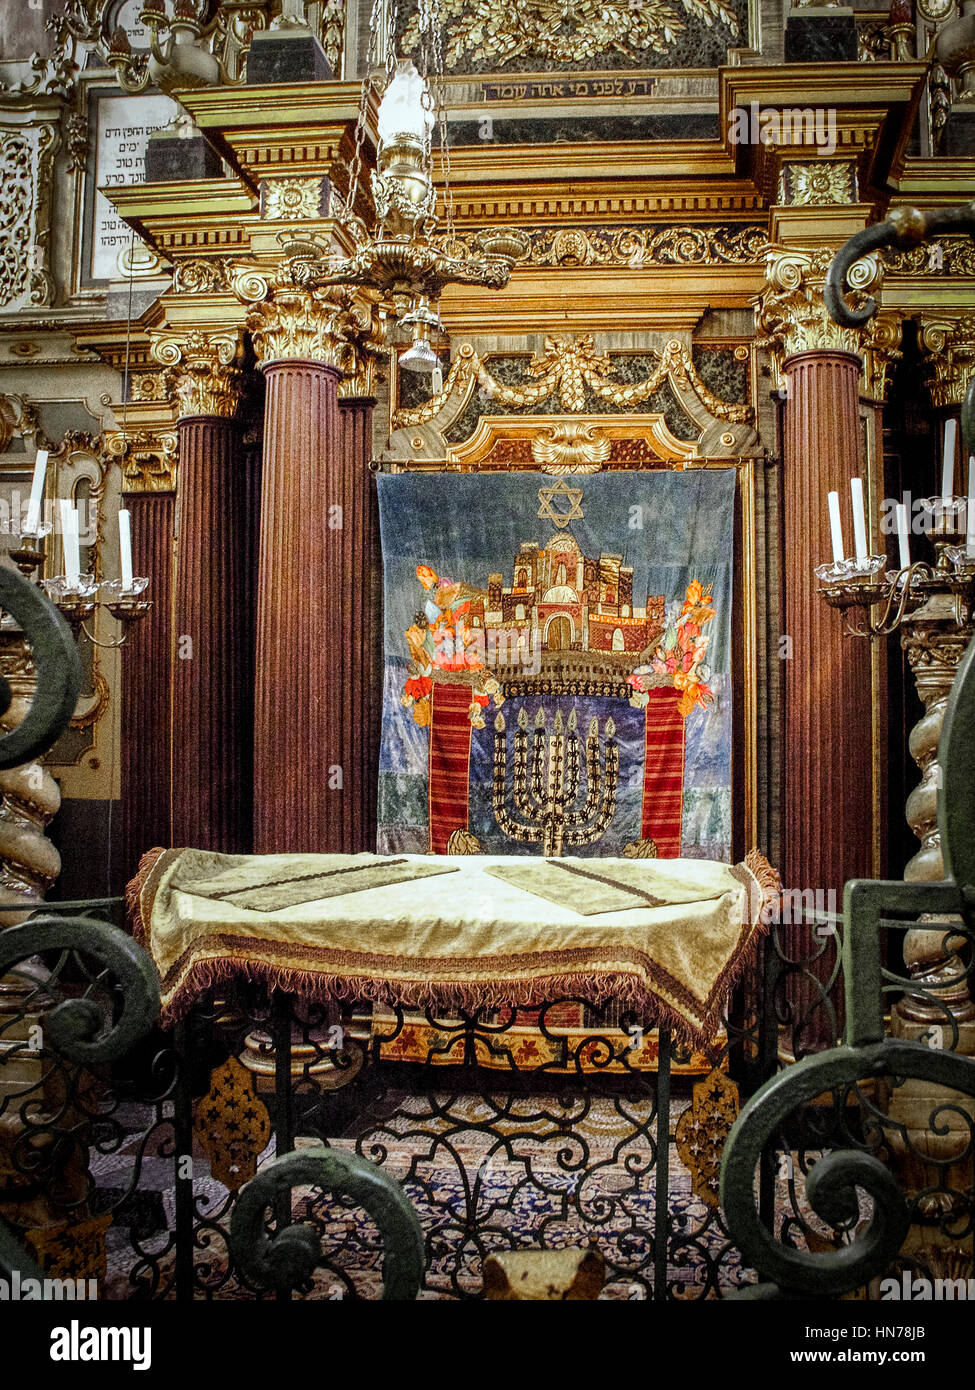 Italy Piedmont Casale Monferrato: Jewish Synagogue: Interior view Stock Photo